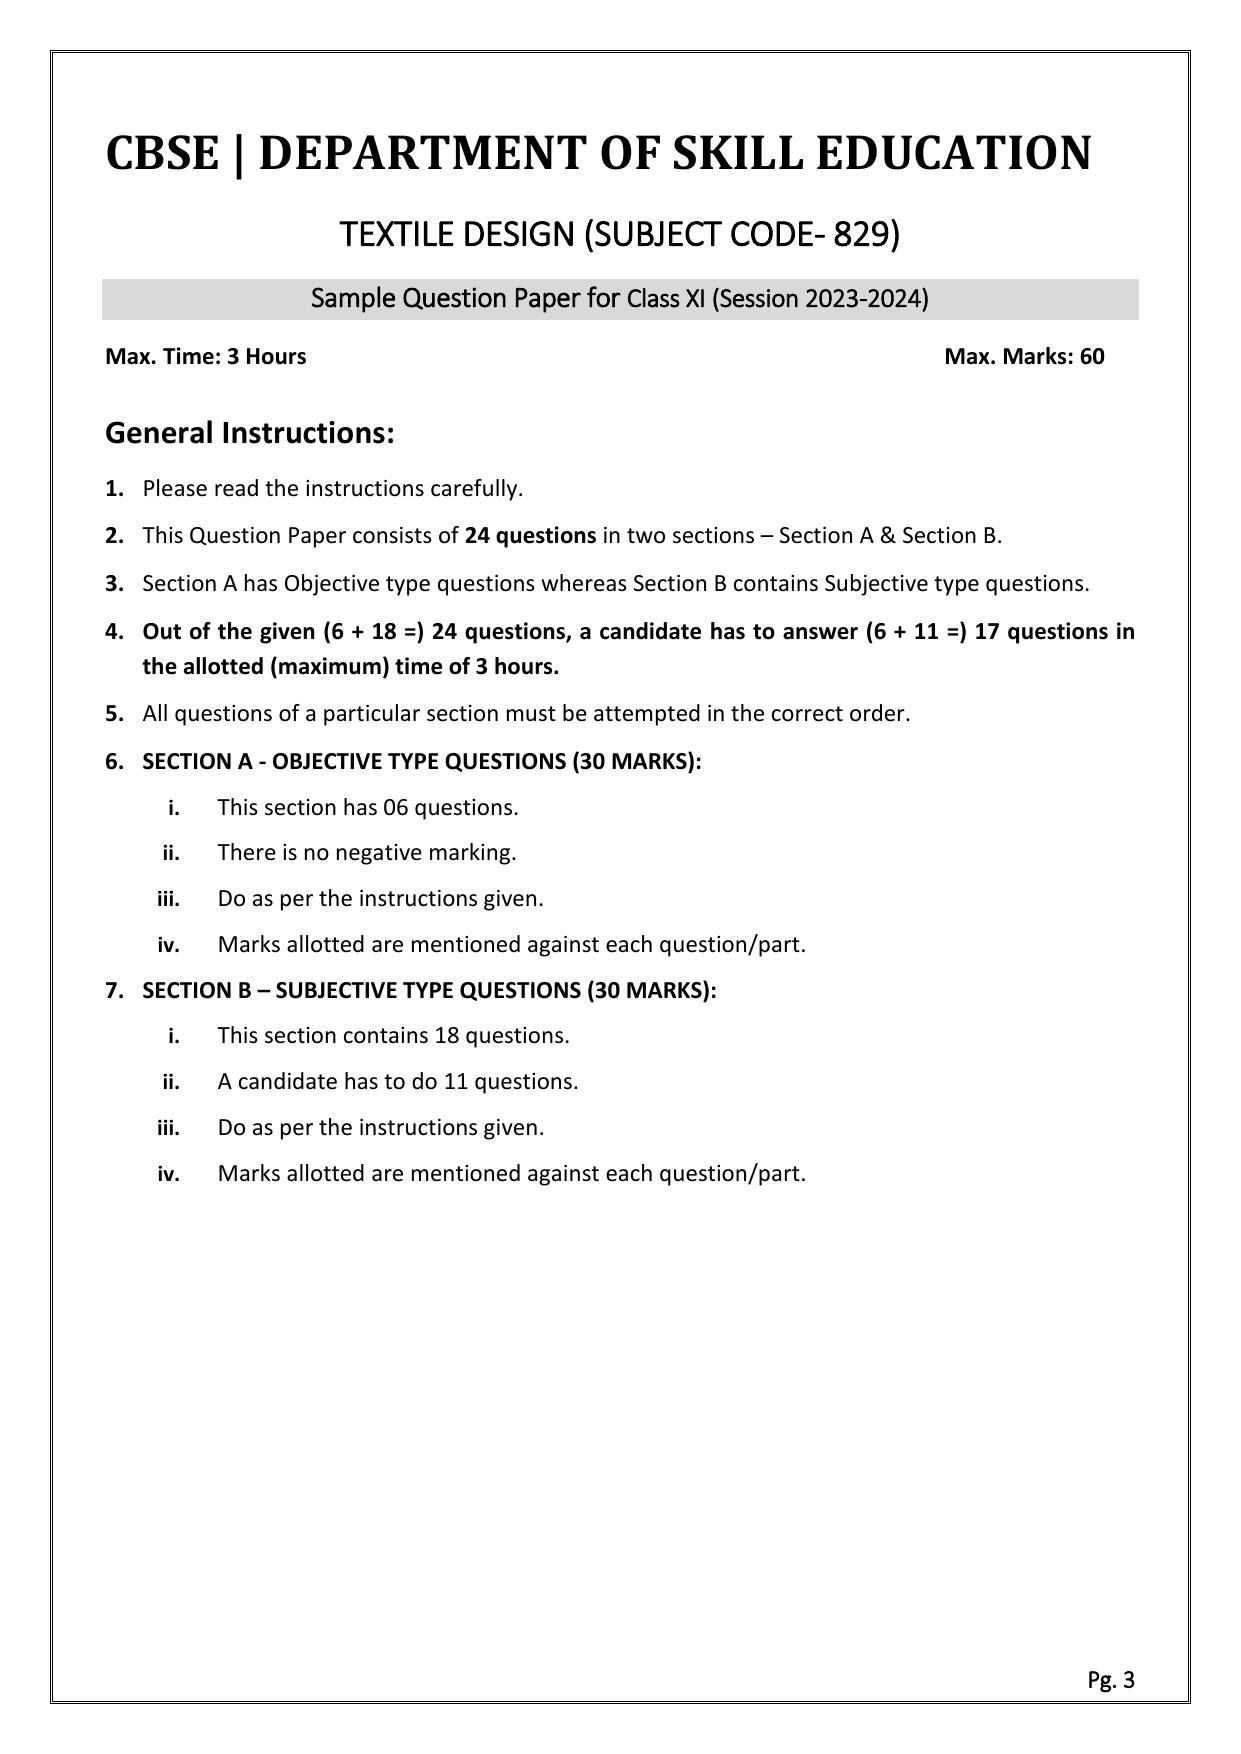 CBSE Class 11: TEXTILE DESIGN 2024 Sample Paper - Page 3